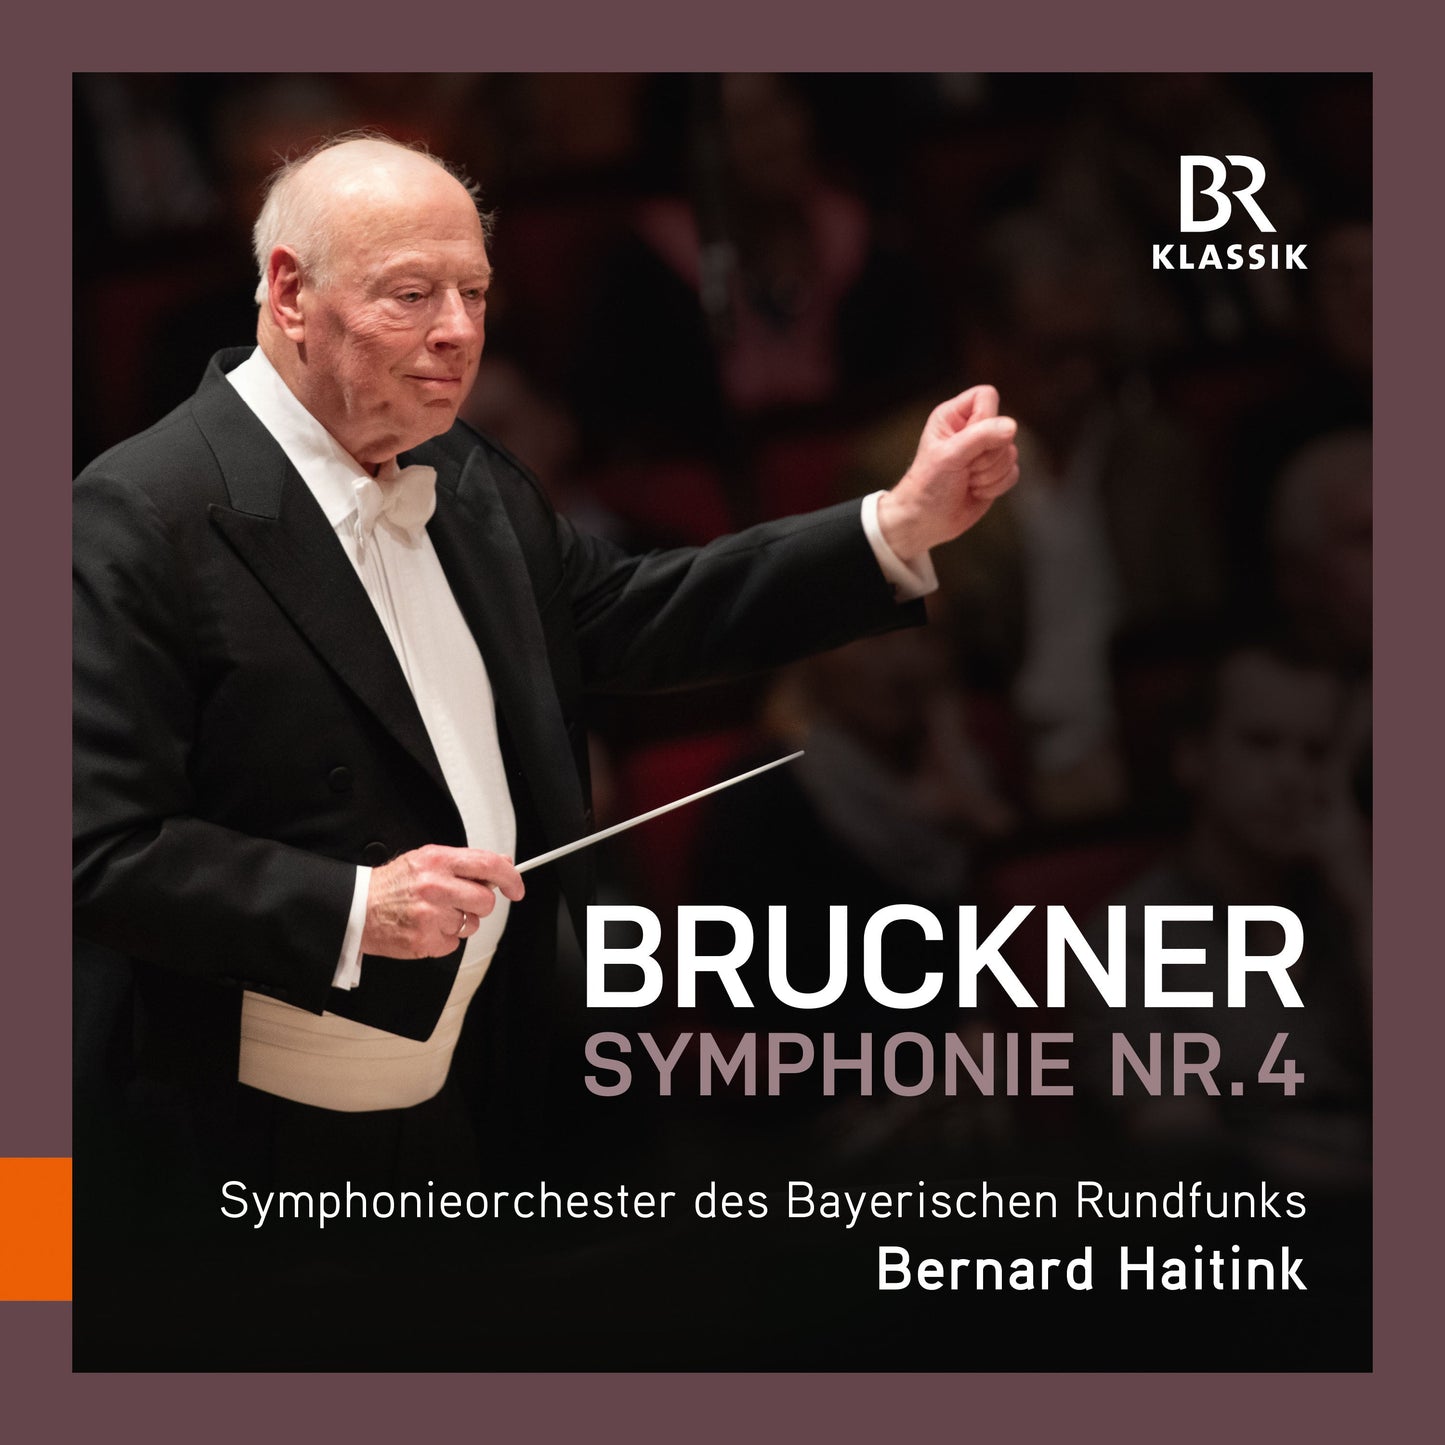 Bruckner: Symphony No. 4 "Romantic" / Bernard Haitink